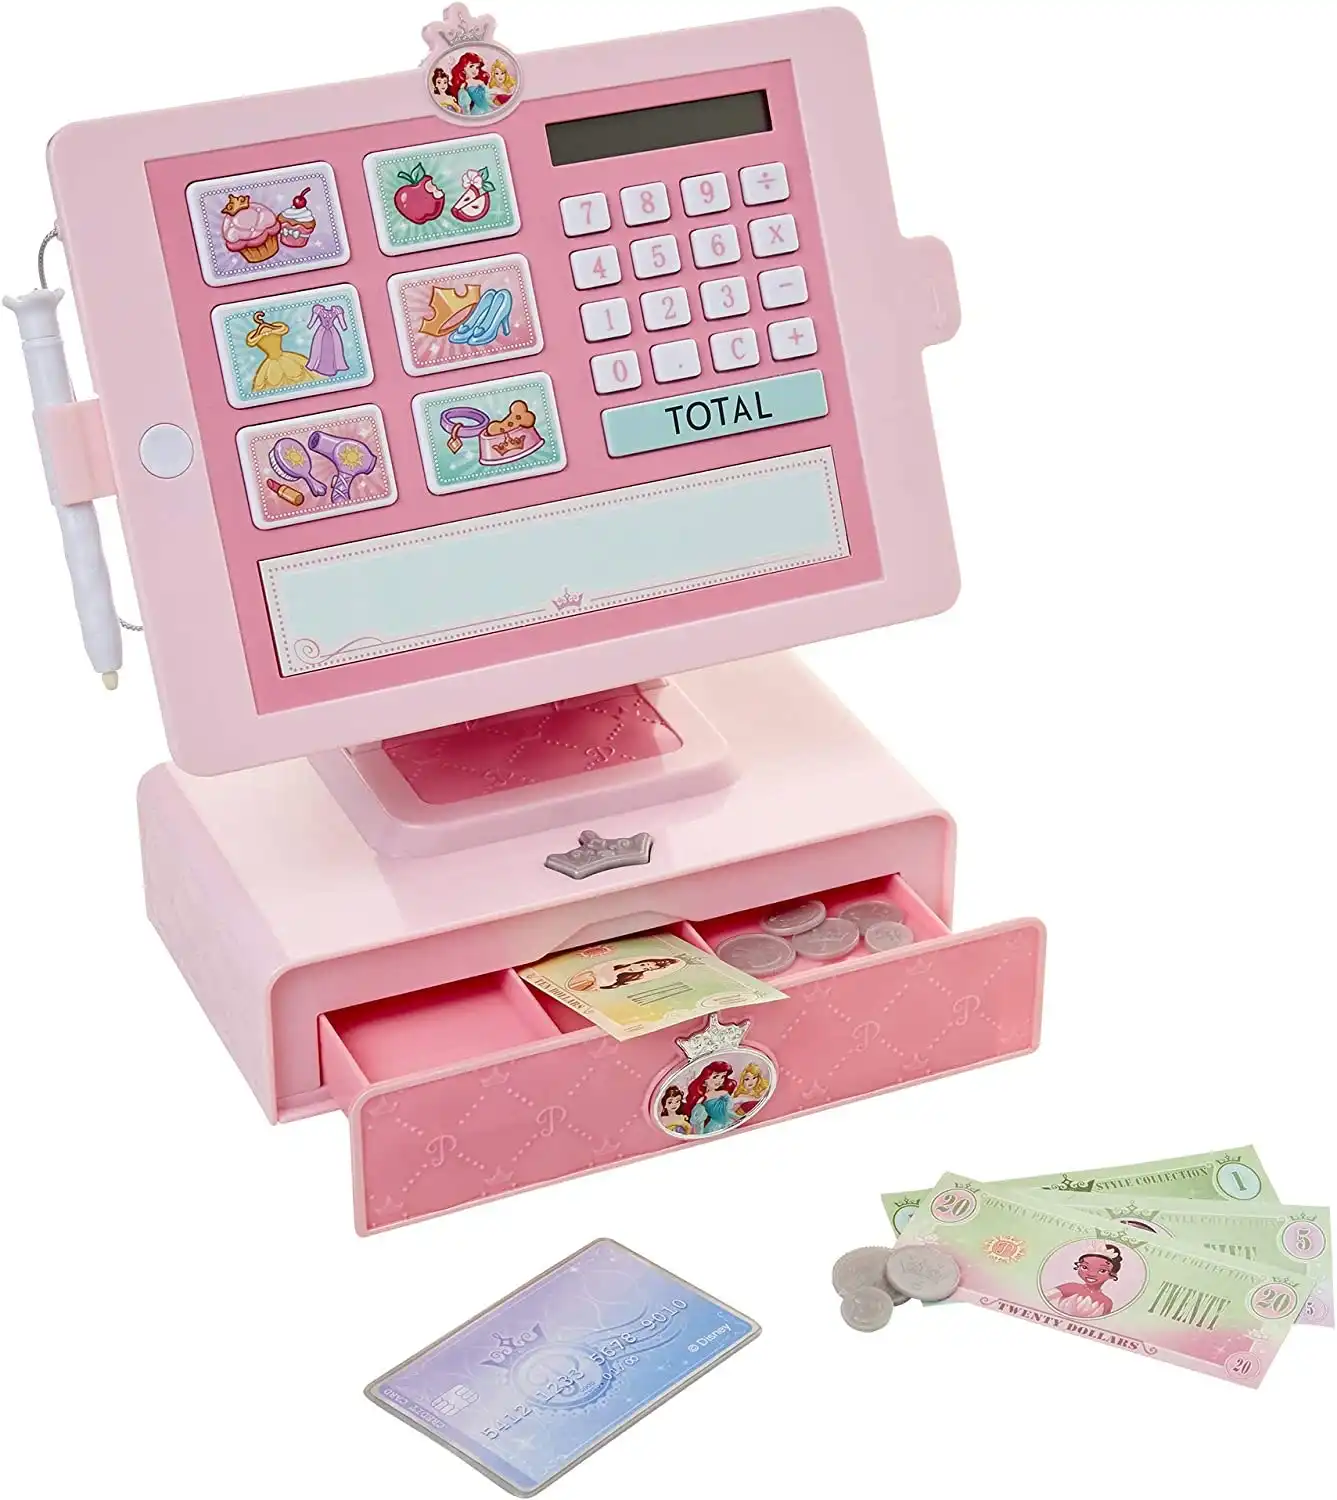 Disney Princess Shop 'N' Play Cash Register